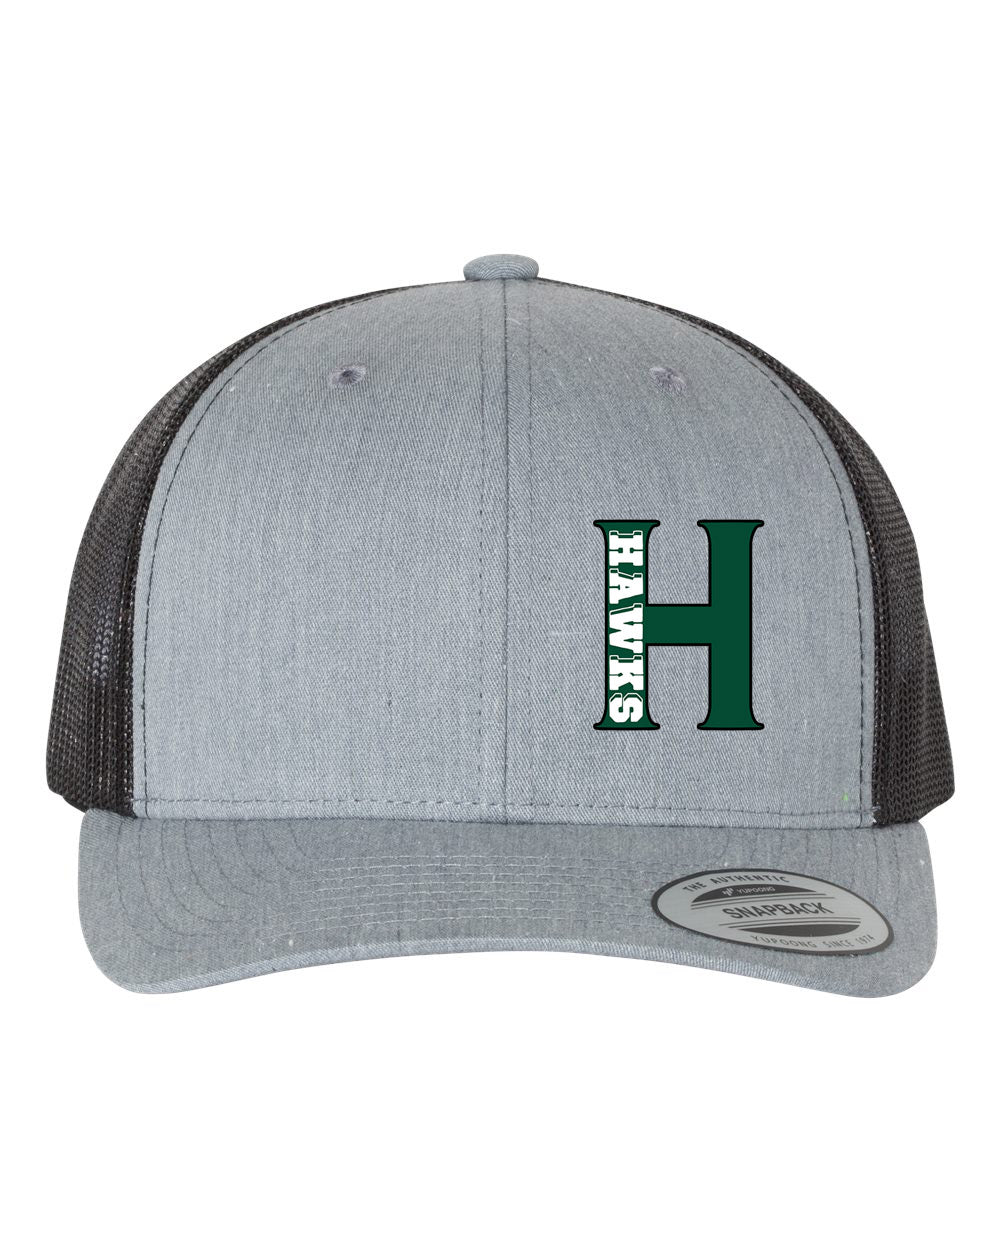 Hilltop Design 5 Trucker Hat